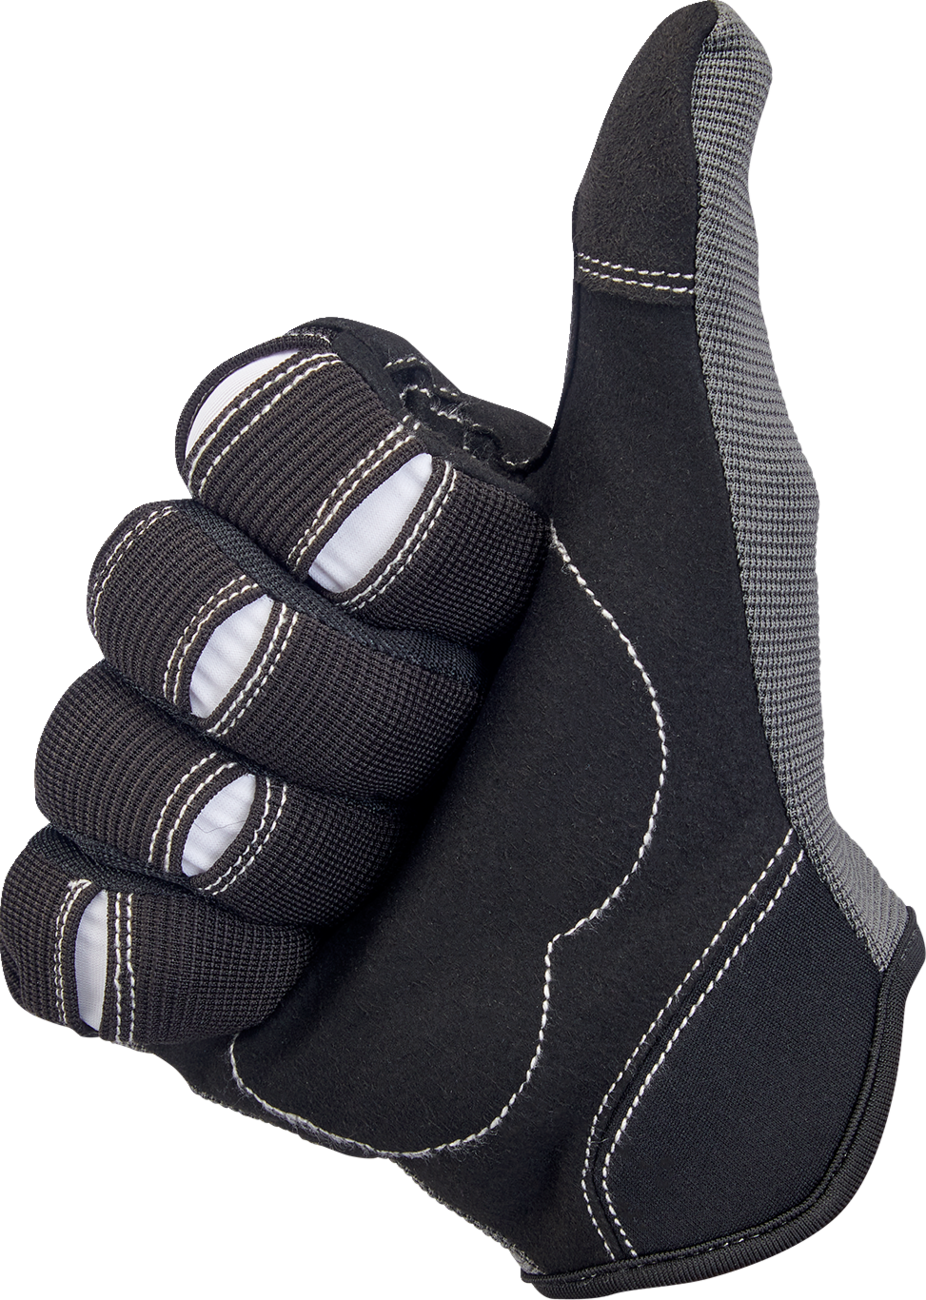 BILTWELL Moto Gloves - Gray/Black - Small 1501-1101-002